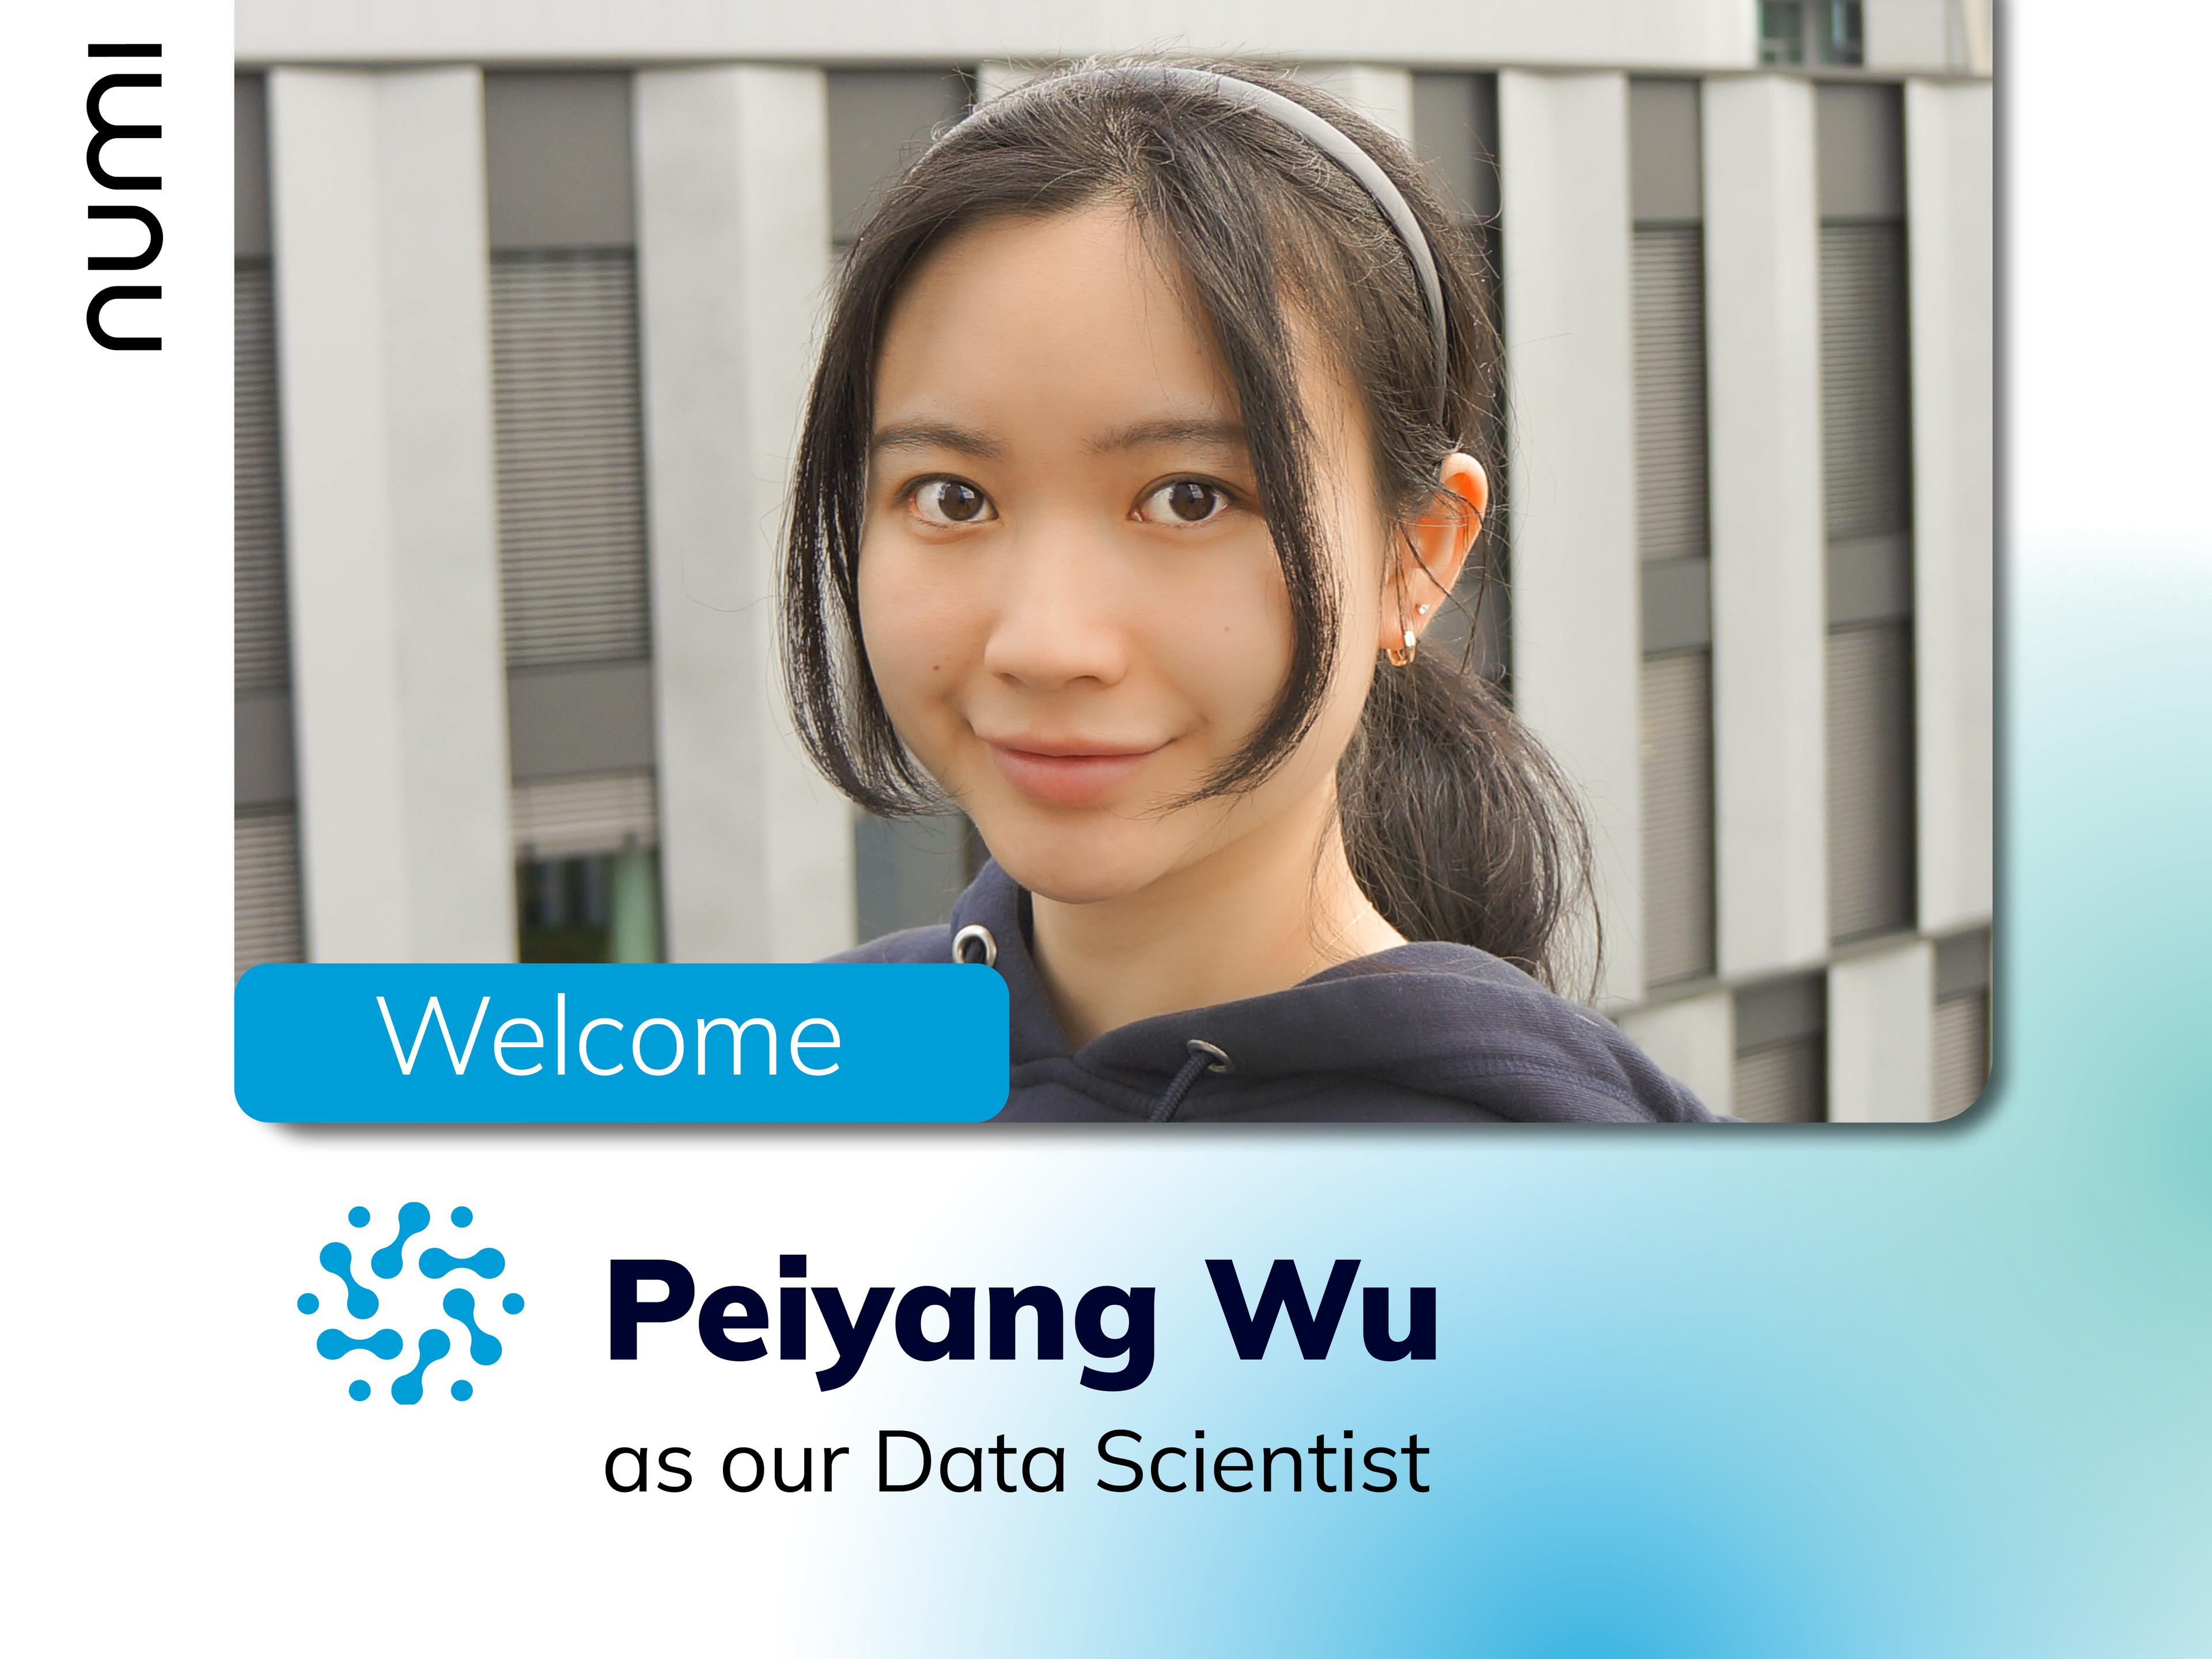 Meet Peiyang Wu, our new Data Scientist